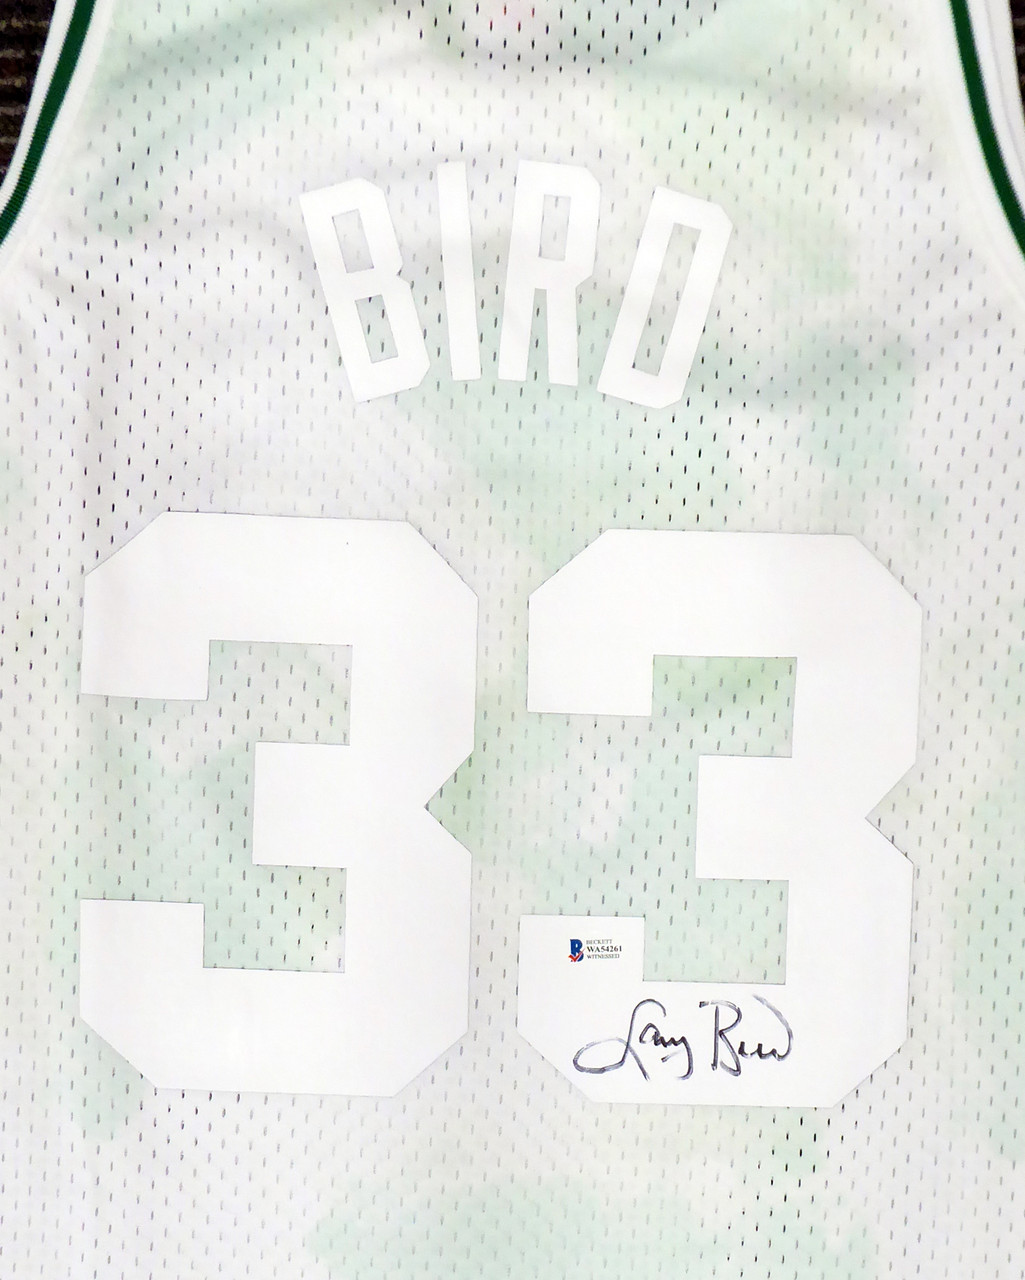 Sports Memorabilia  Larry Bird's Boston Celtics Signed White Jersey